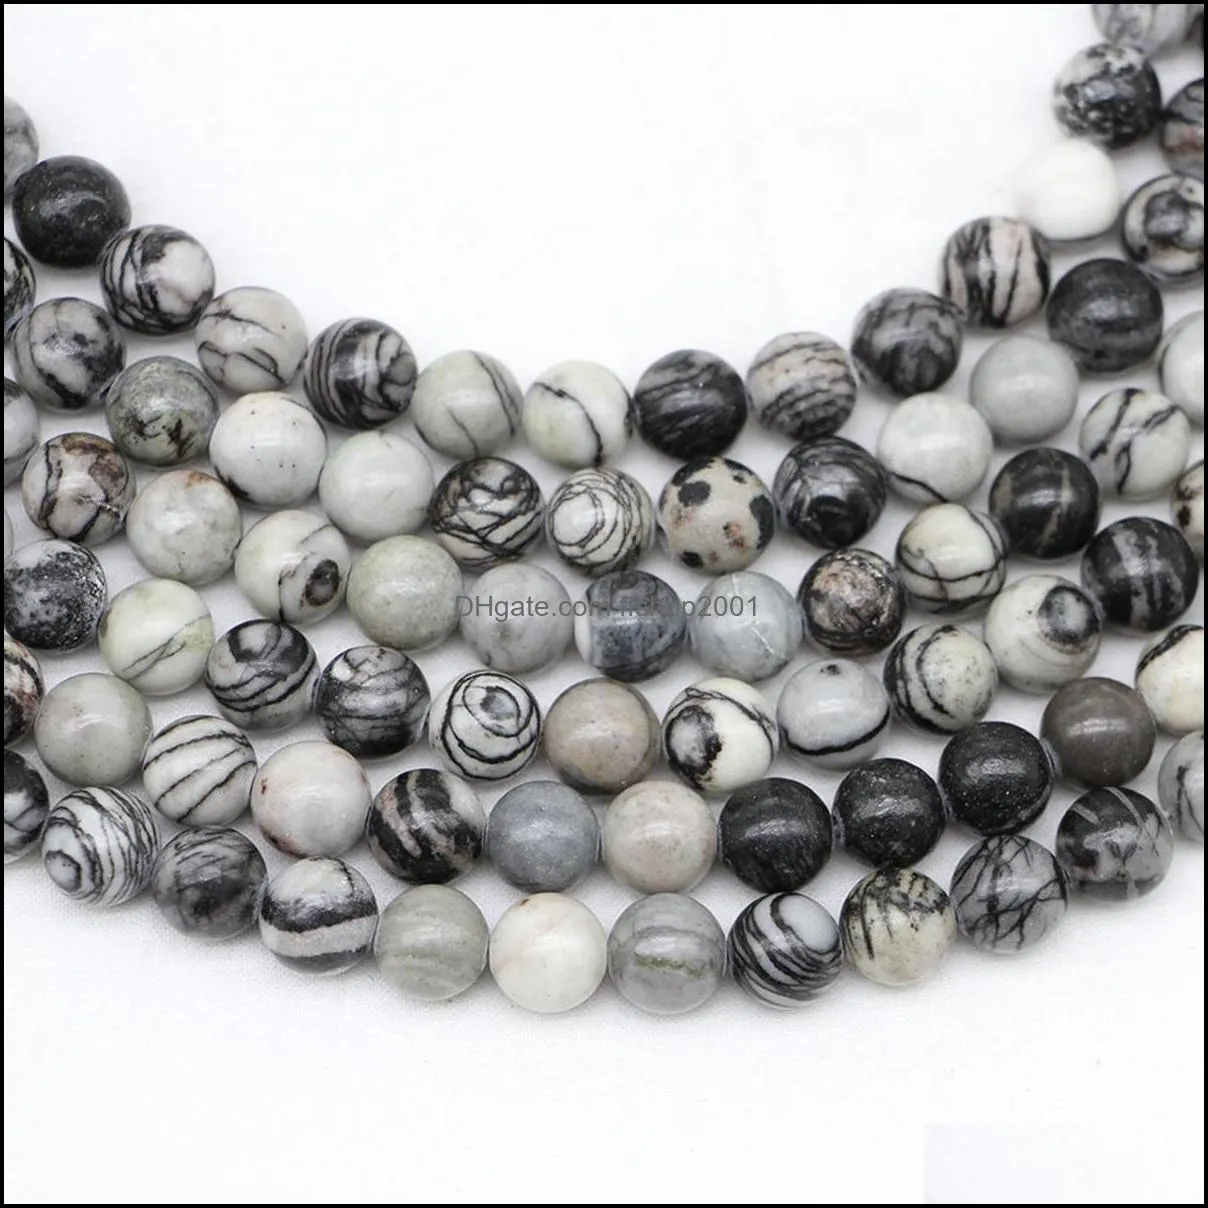 Mesh Jasper Round Beads Polished Round Smooth Gemstone Round Crystal Energy Healing Bead Assortments for Jewelry Making Bracelet Necklace